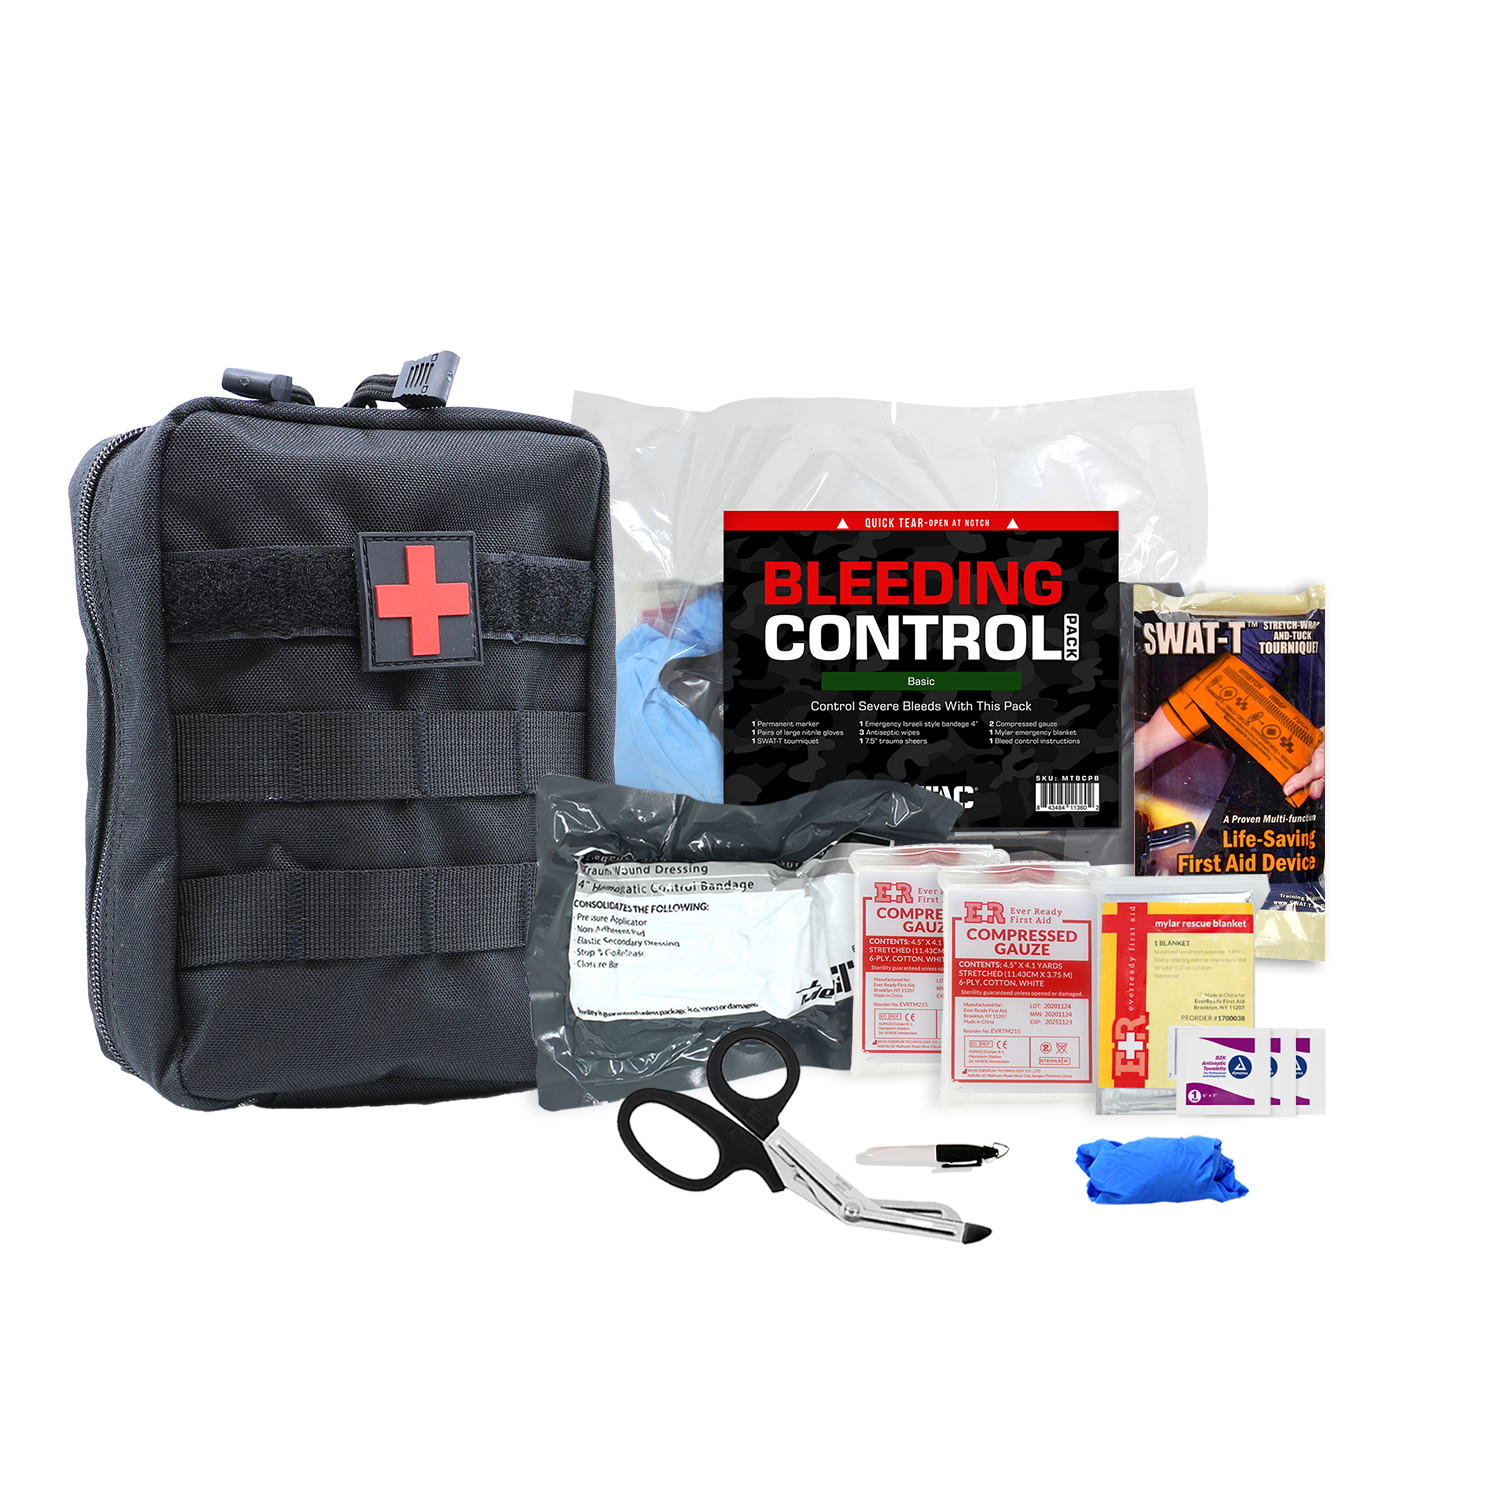 MediTac Basic Bleeding Control Pack Feat. SWAT-T Tourniquet, Emergency Bandage and Compressed Gauze Dressing